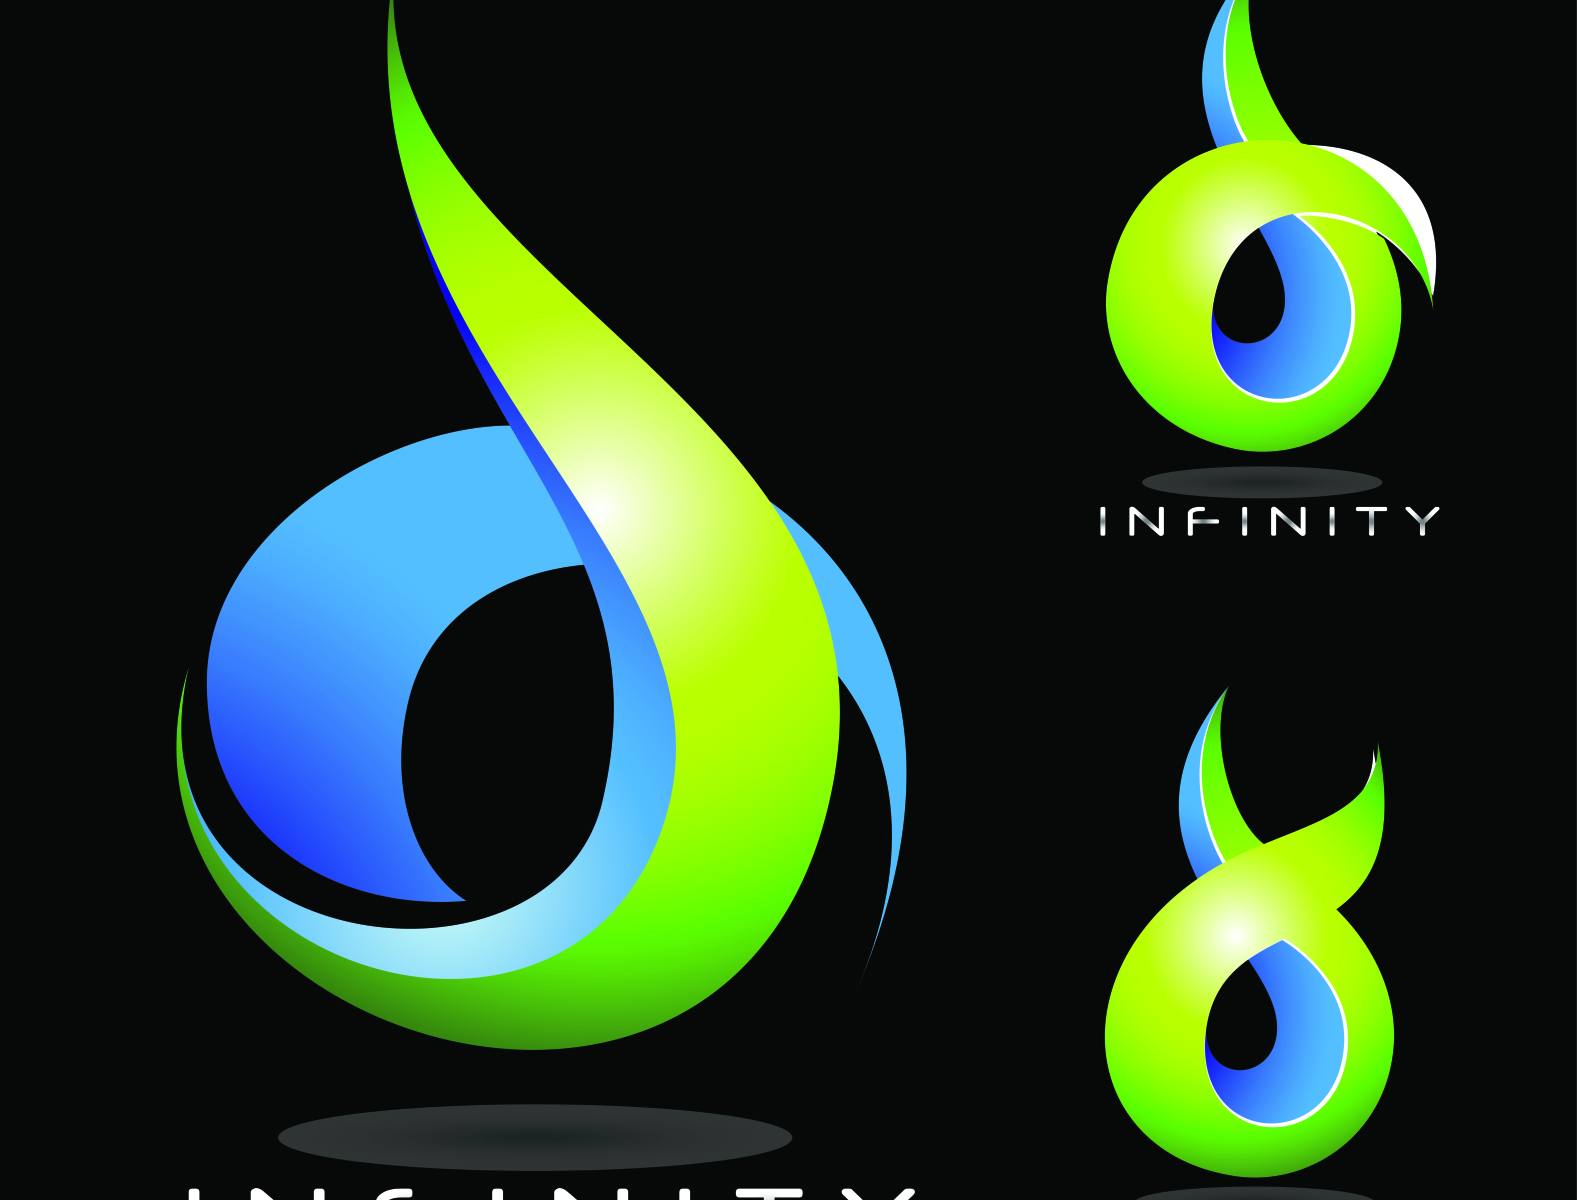 creative infinity logo design